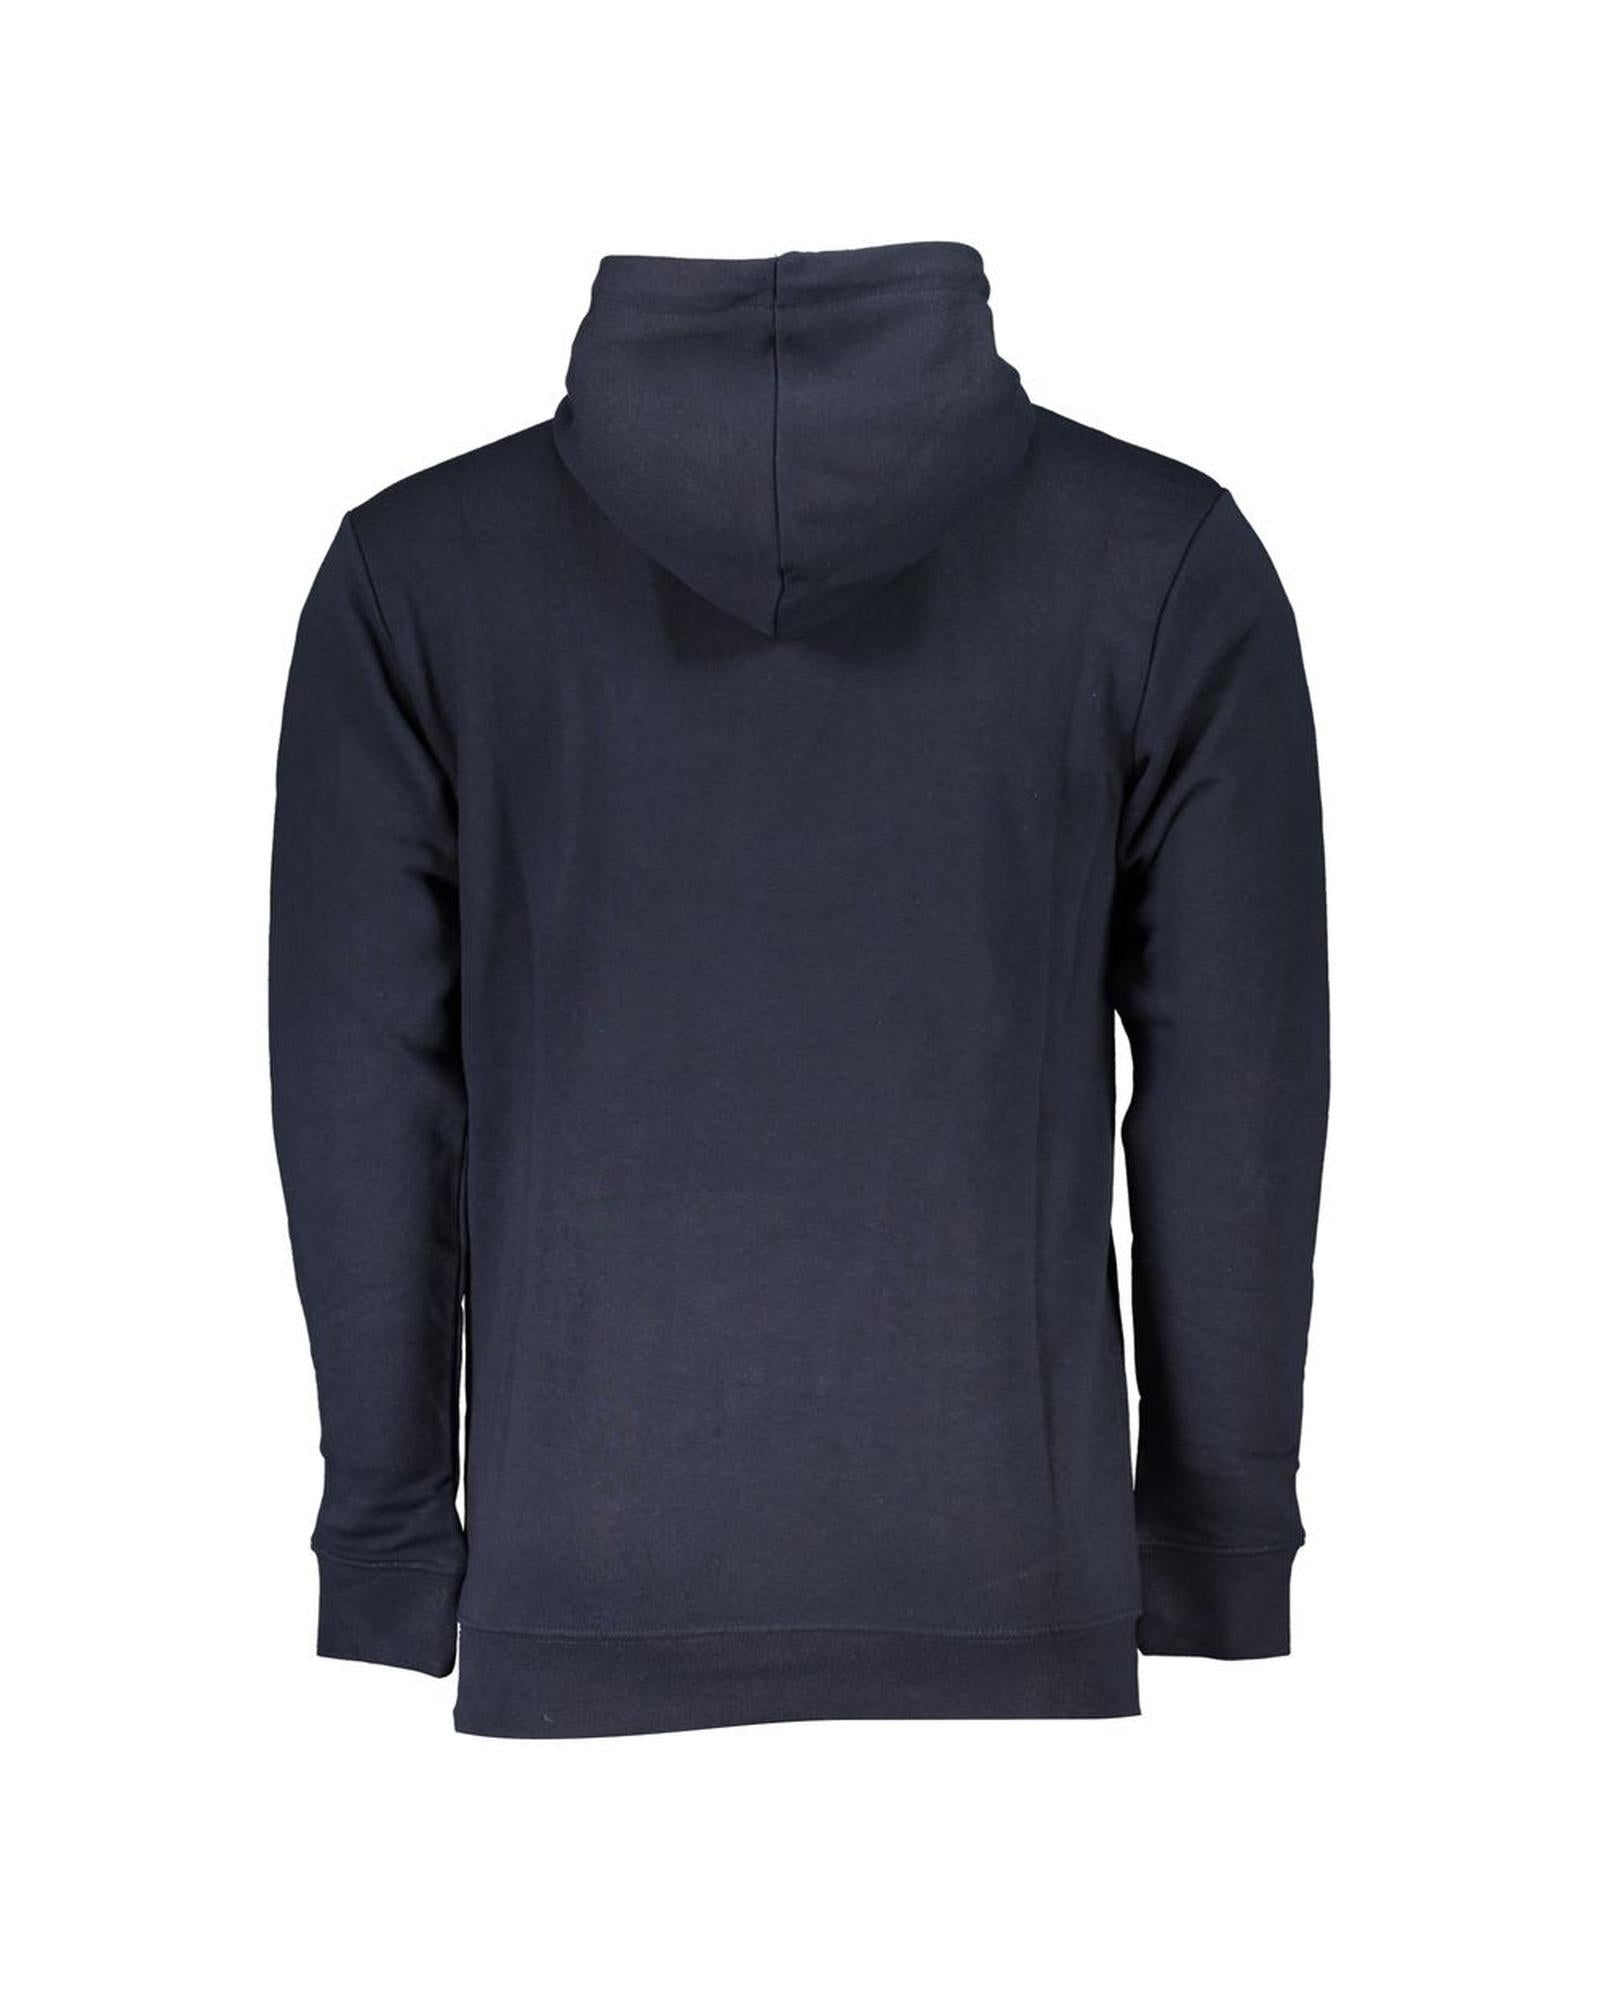 Sleek Black/Blue Cotton Sweater - Cavalli Class